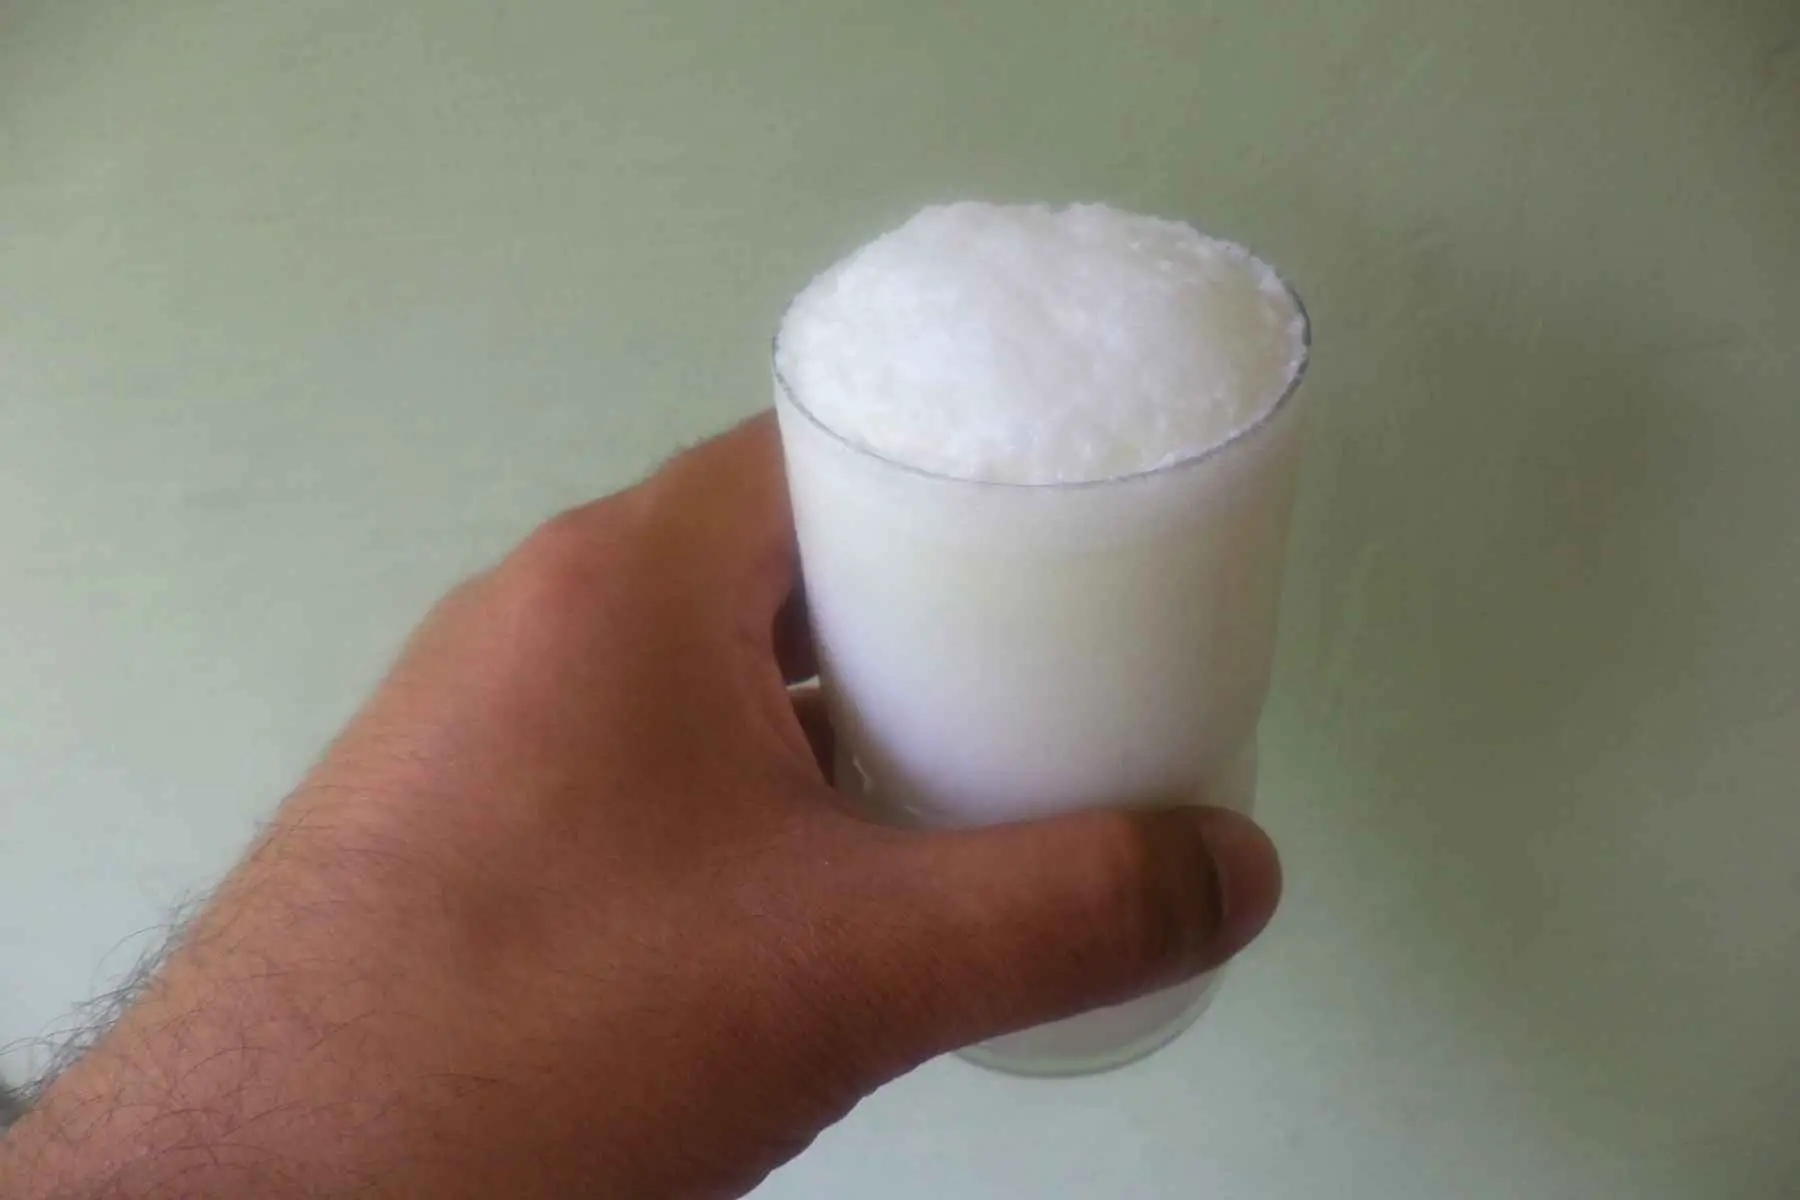 Hand holding a glass of buttermilk